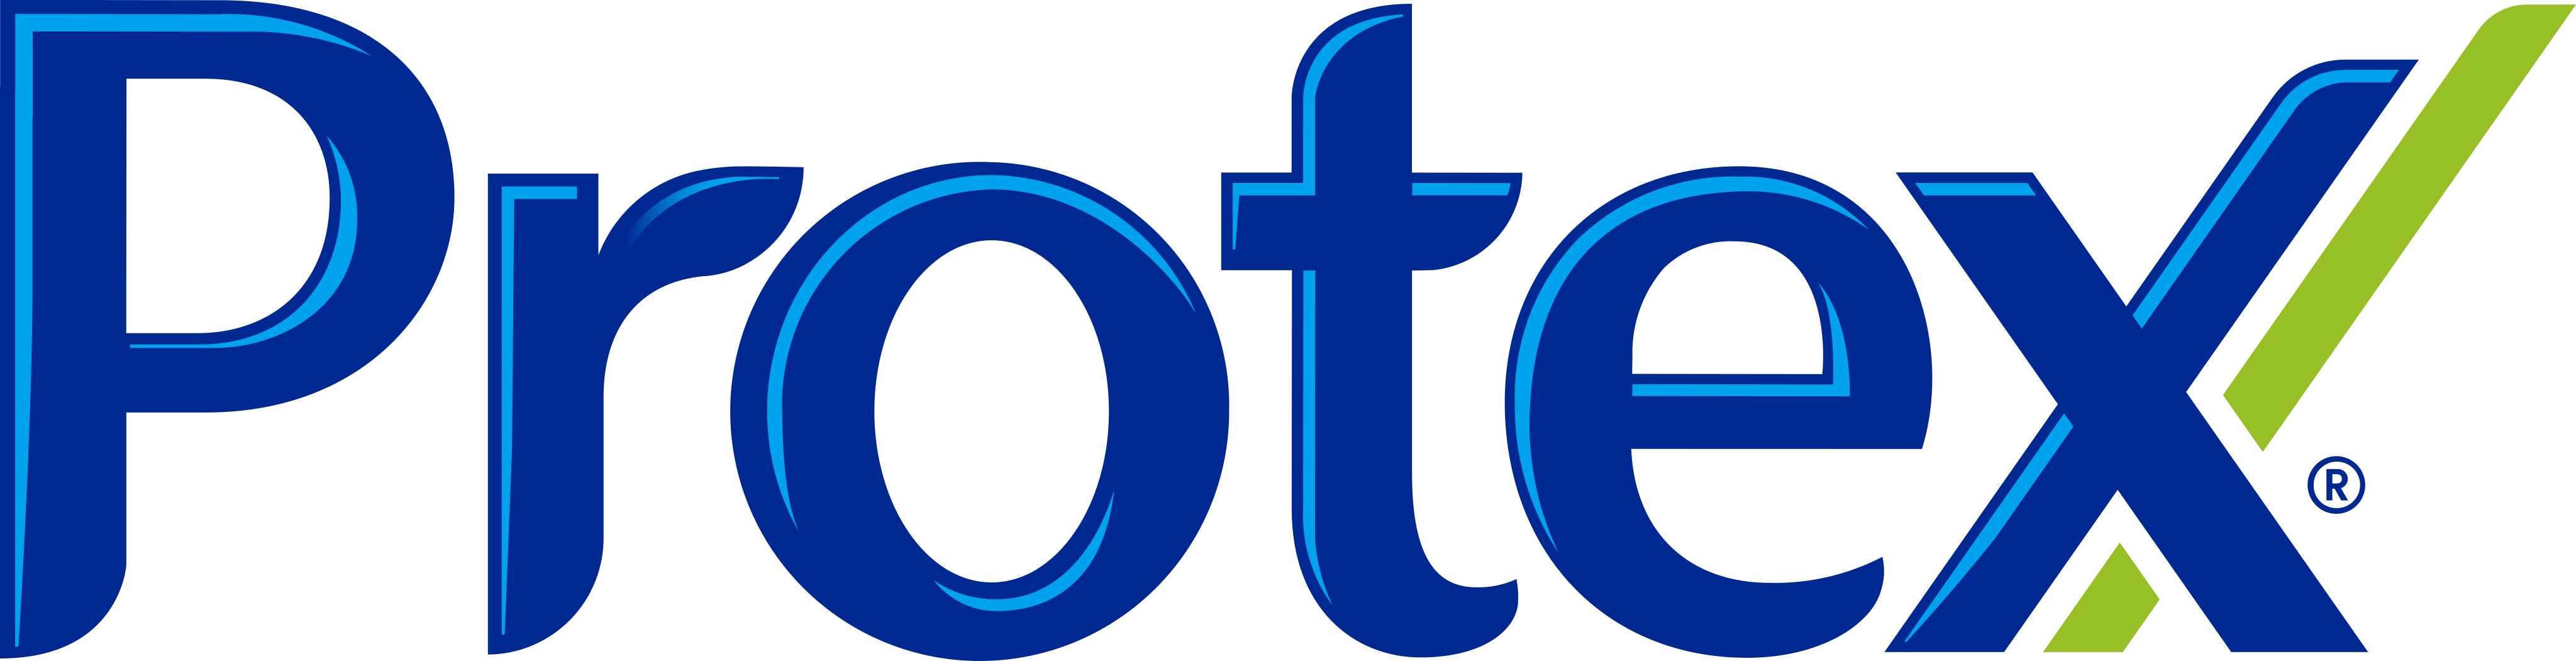 Protex Logo.